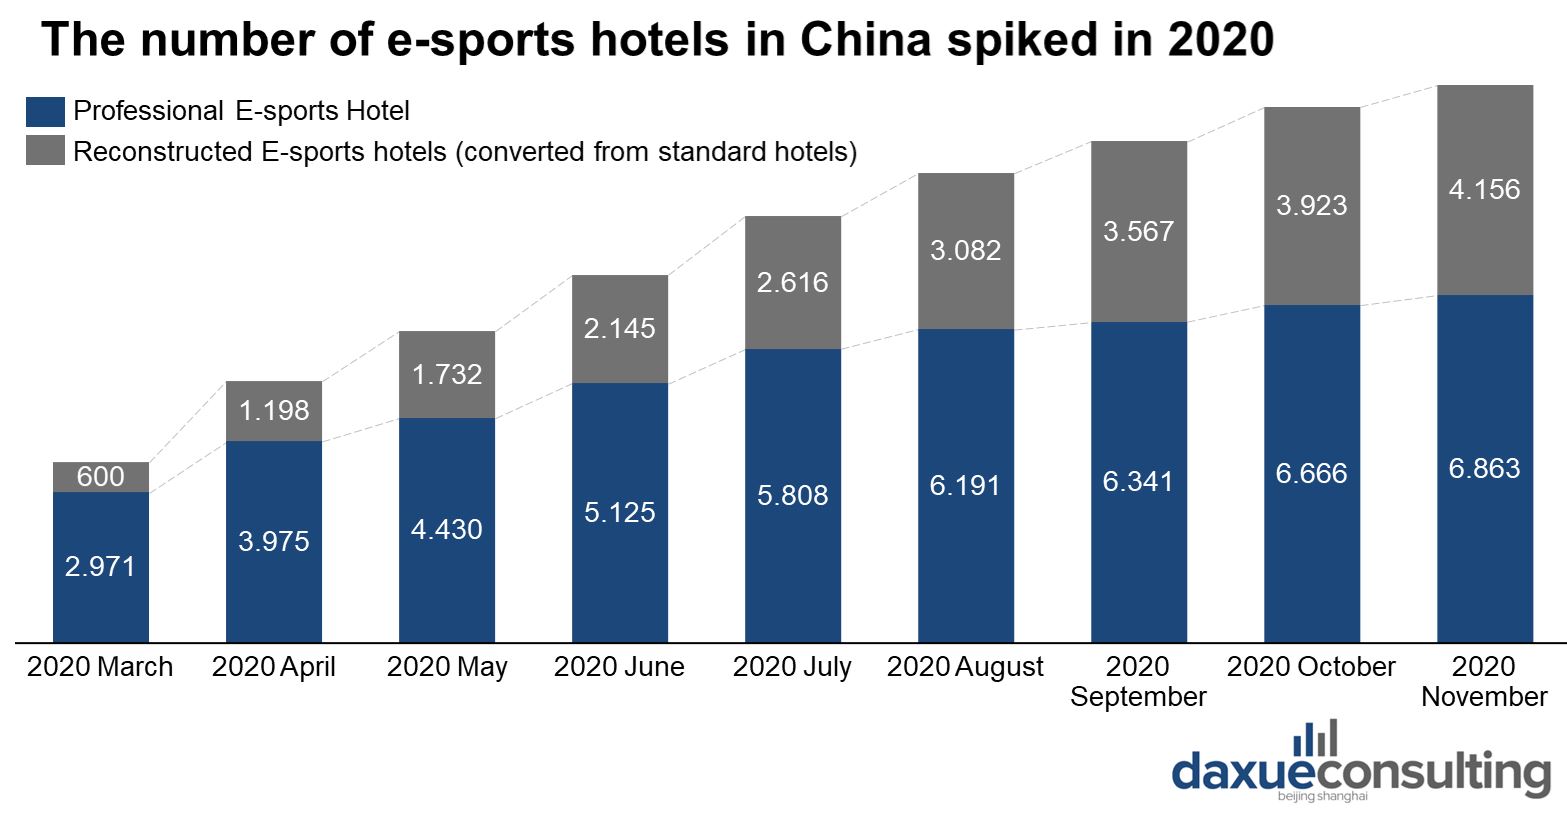  2020 China's e-sports hotel market size